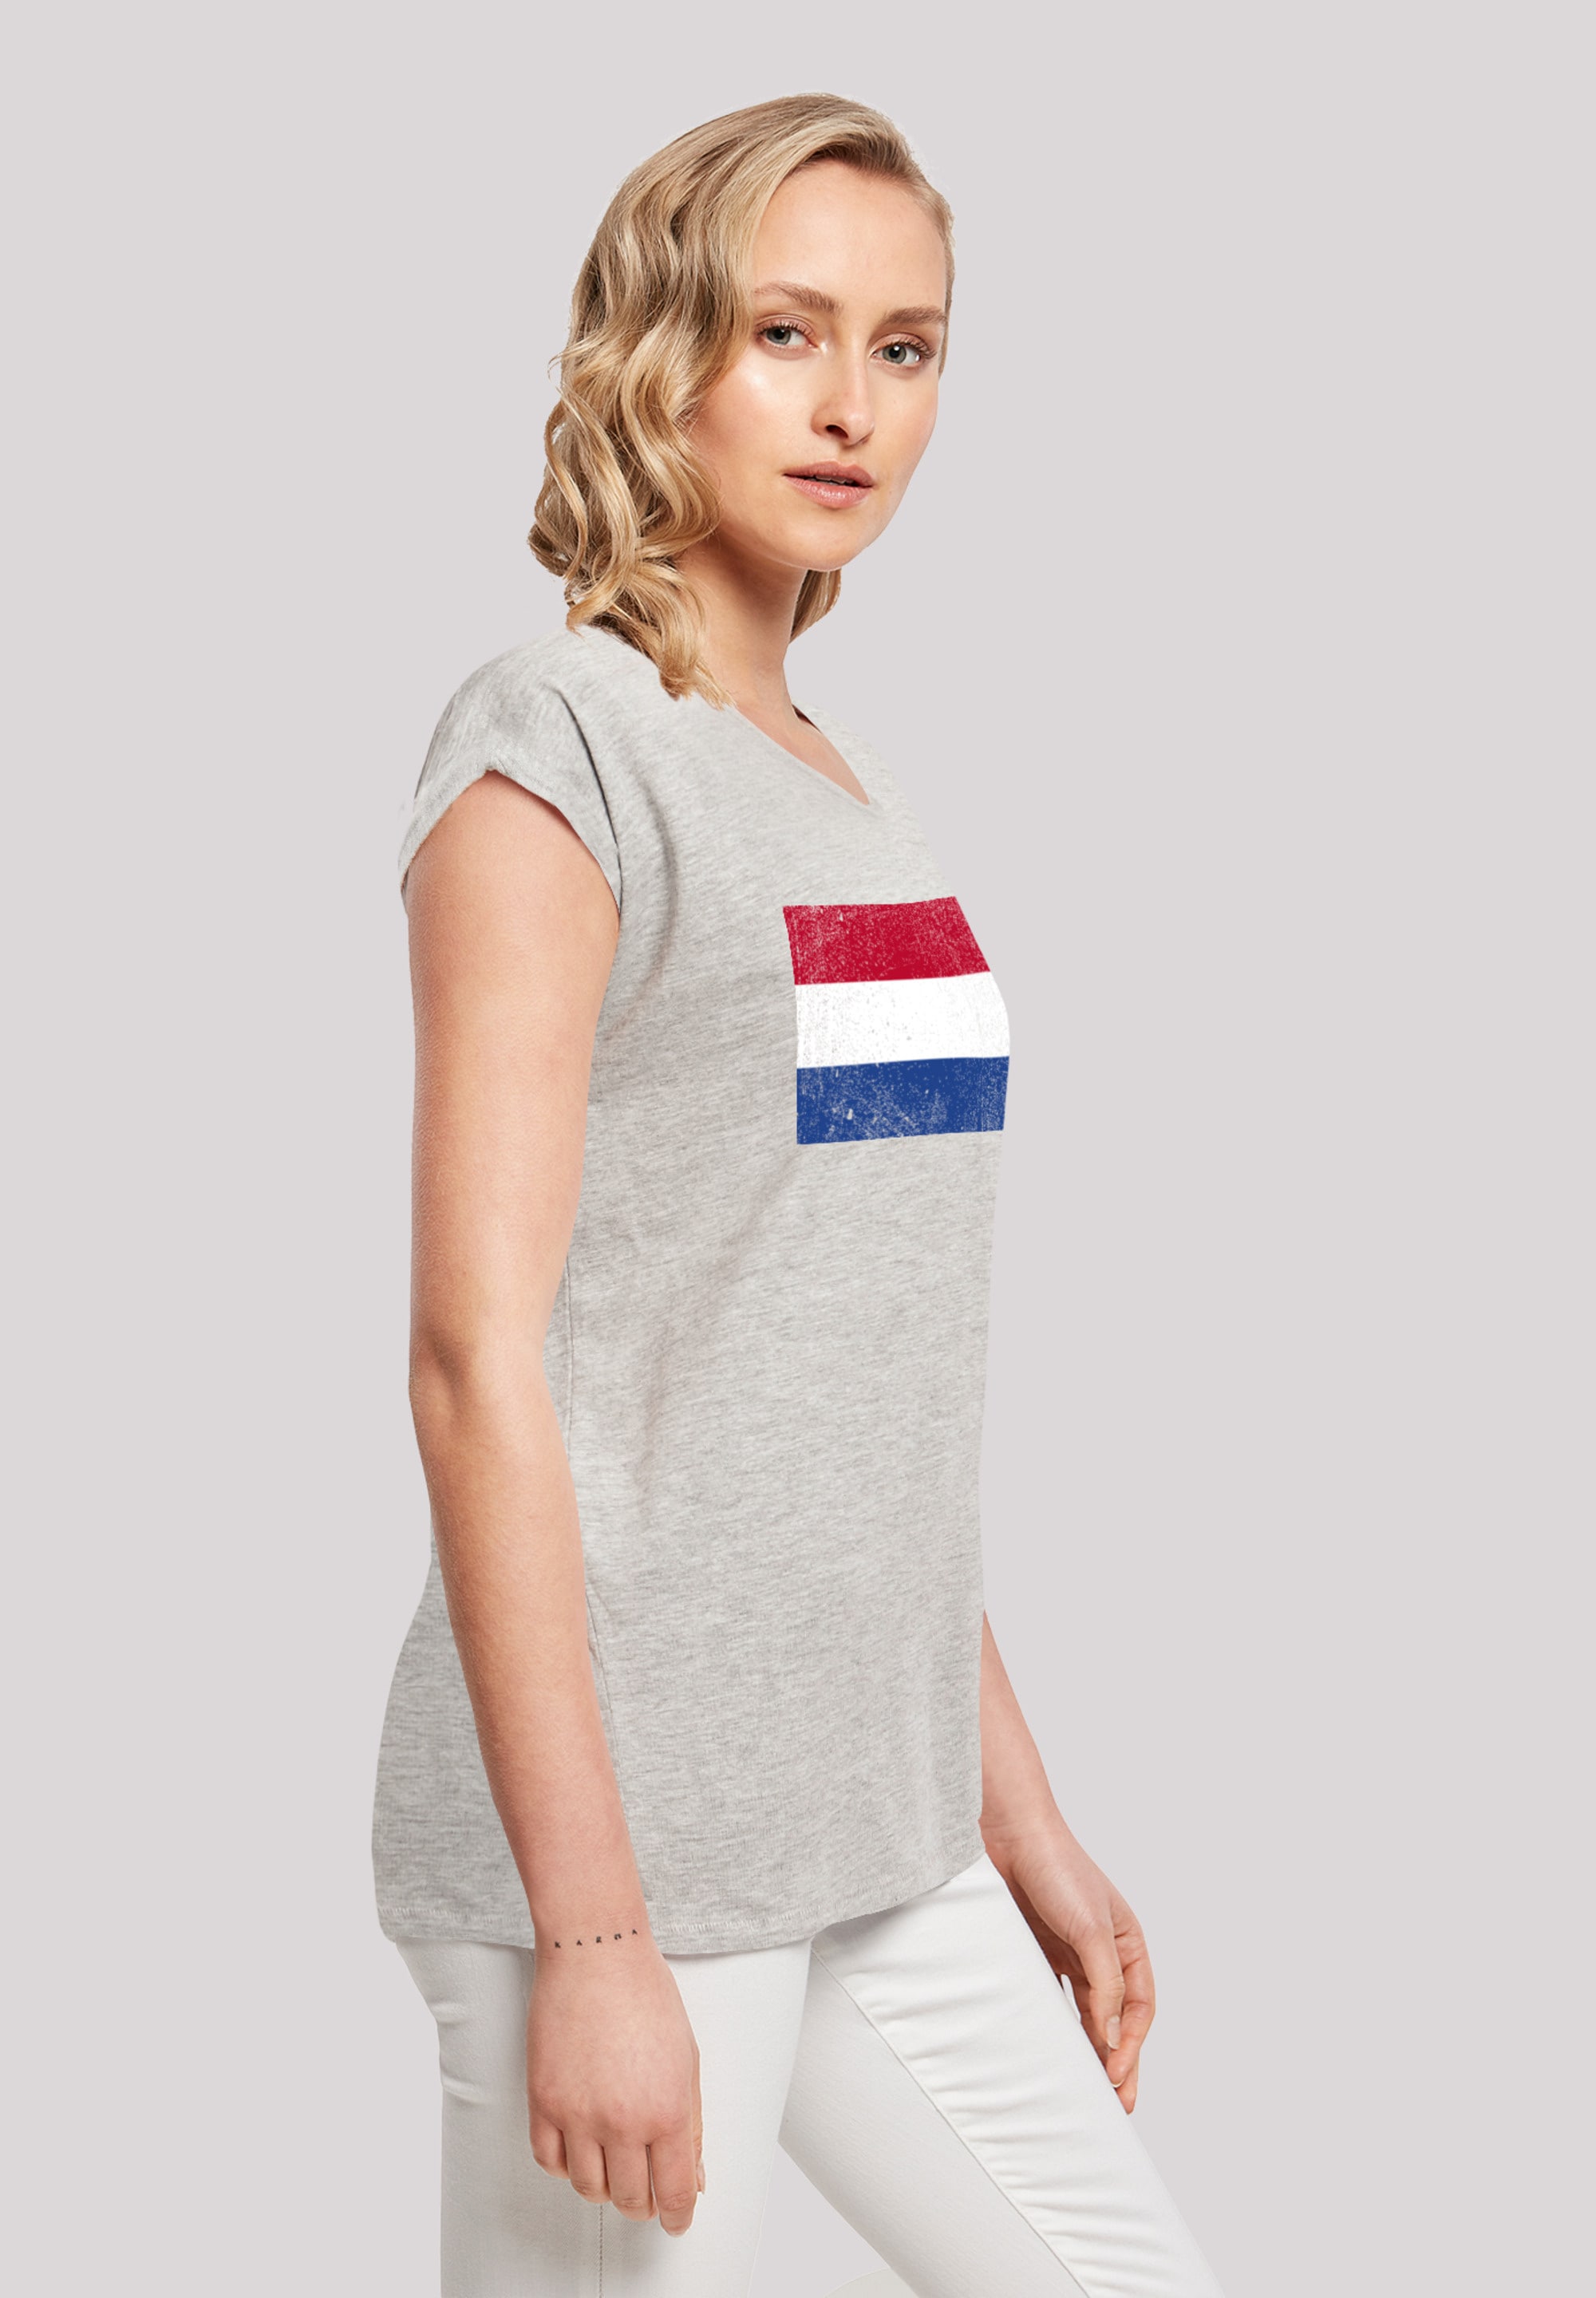 Holland Print NIederlande »Netherlands F4NT4STIC kaufen distressed«, T-Shirt Flagge